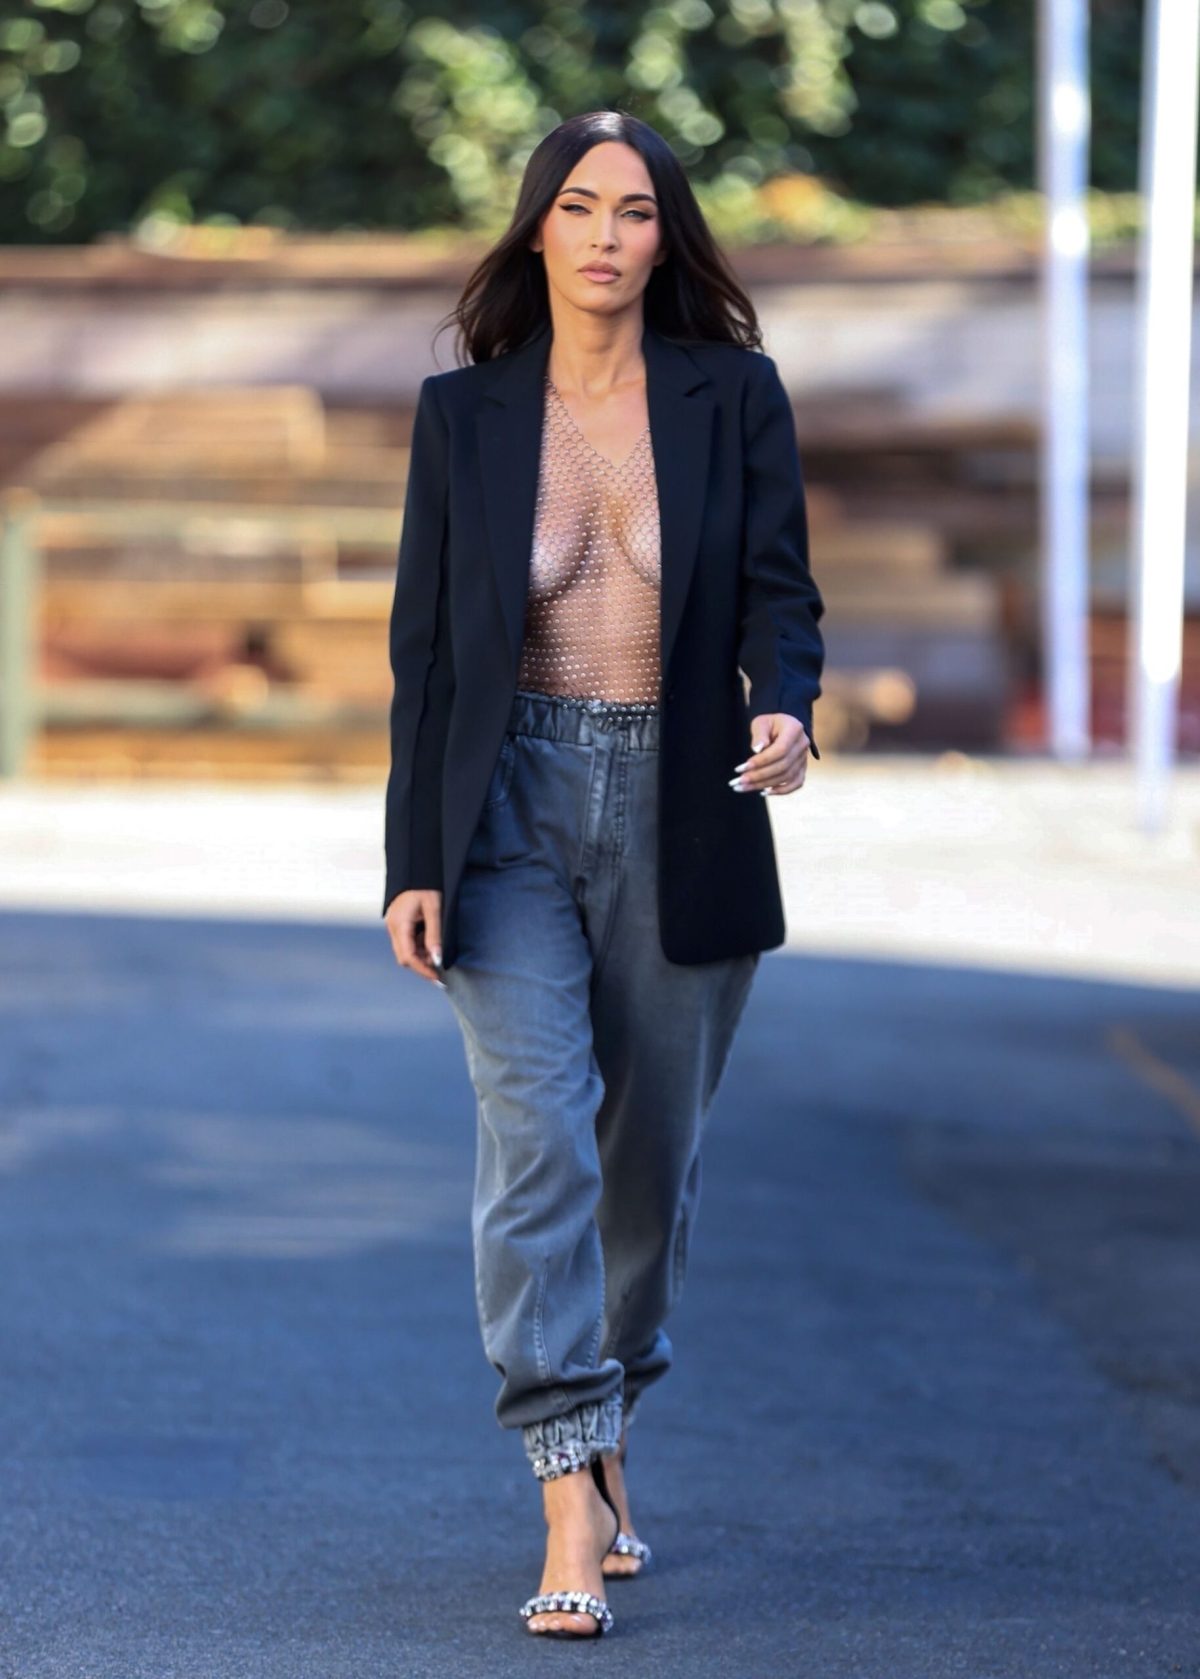 Megan Fox cleavage on display in a black blazer following photoshoot in LA.